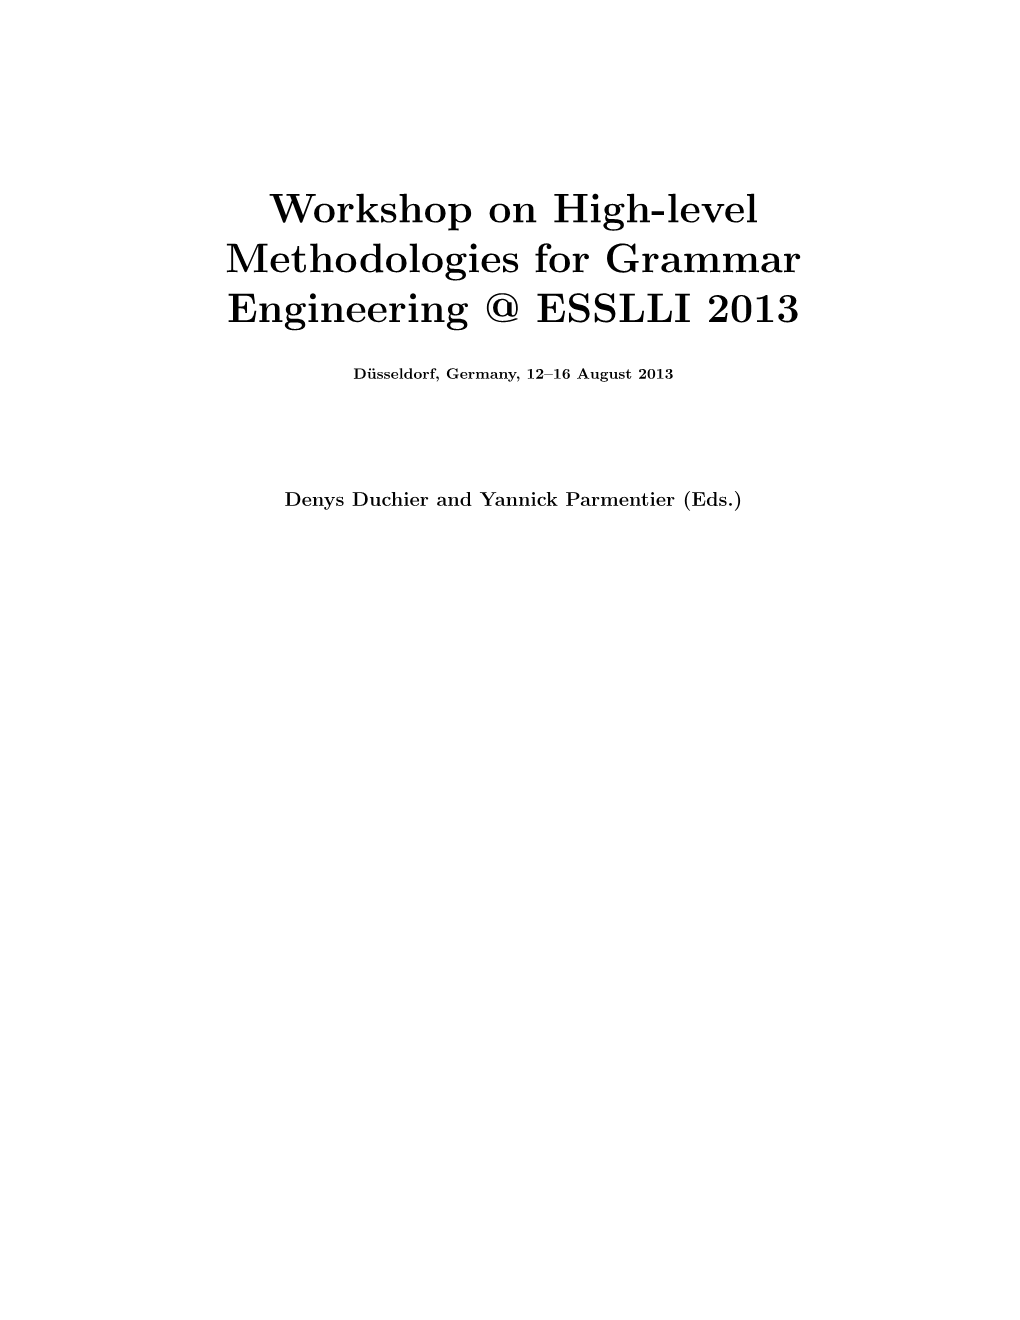 Workshop on High-Level Methodologies for Grammar Engineering @ ESSLLI 2013